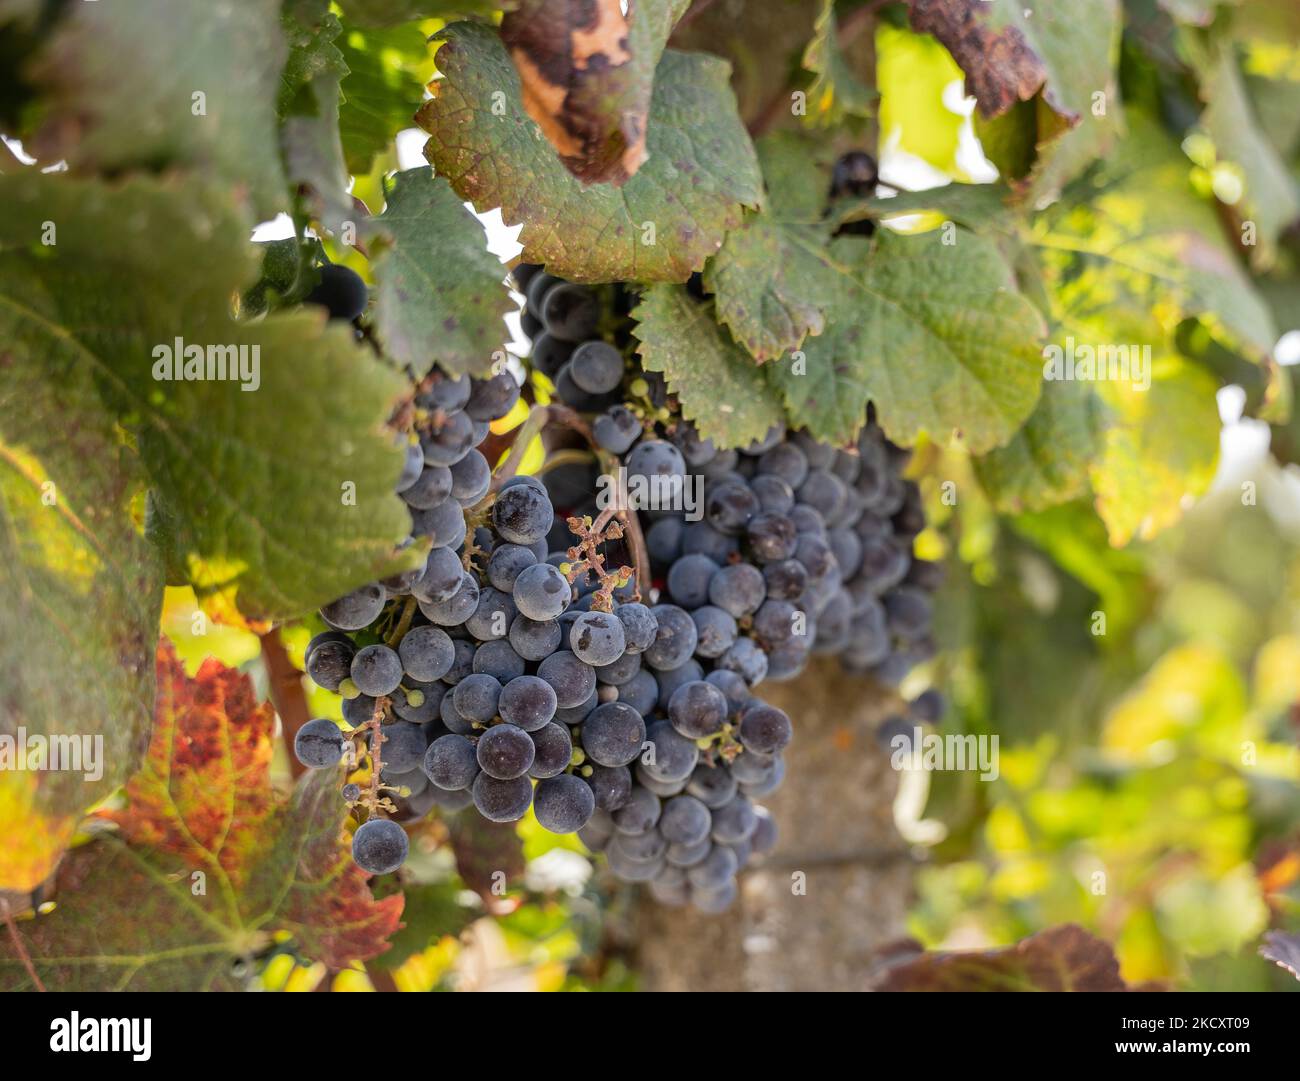 Merlot grapes ready for harvest Stock Photo